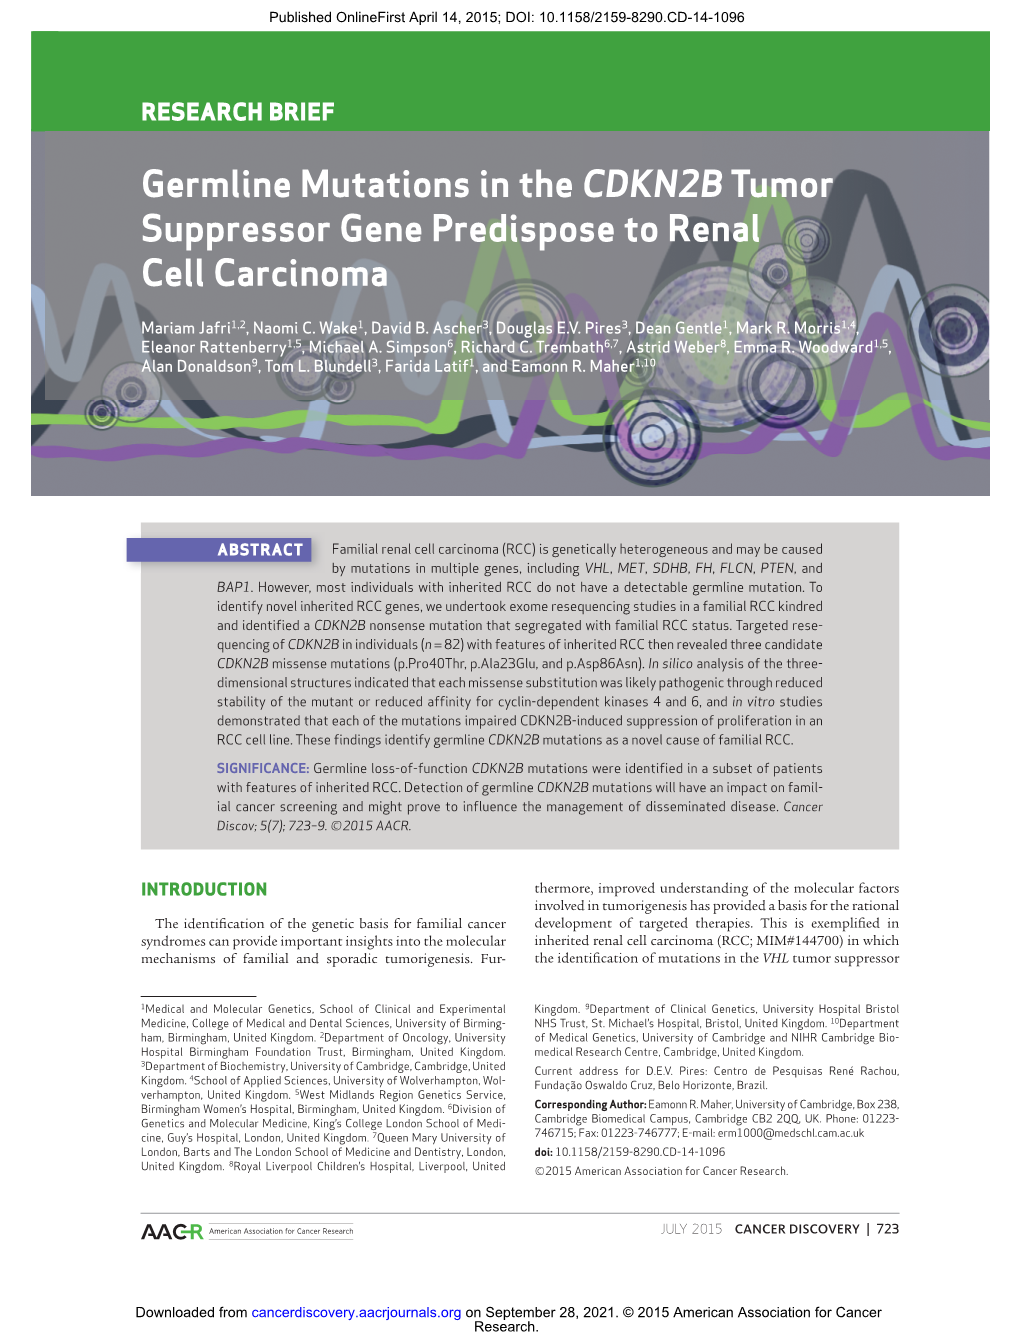 Germline Mutations in the CDKN2B Tumor Suppressor Gene Predispose to Renal Cell Carcinoma